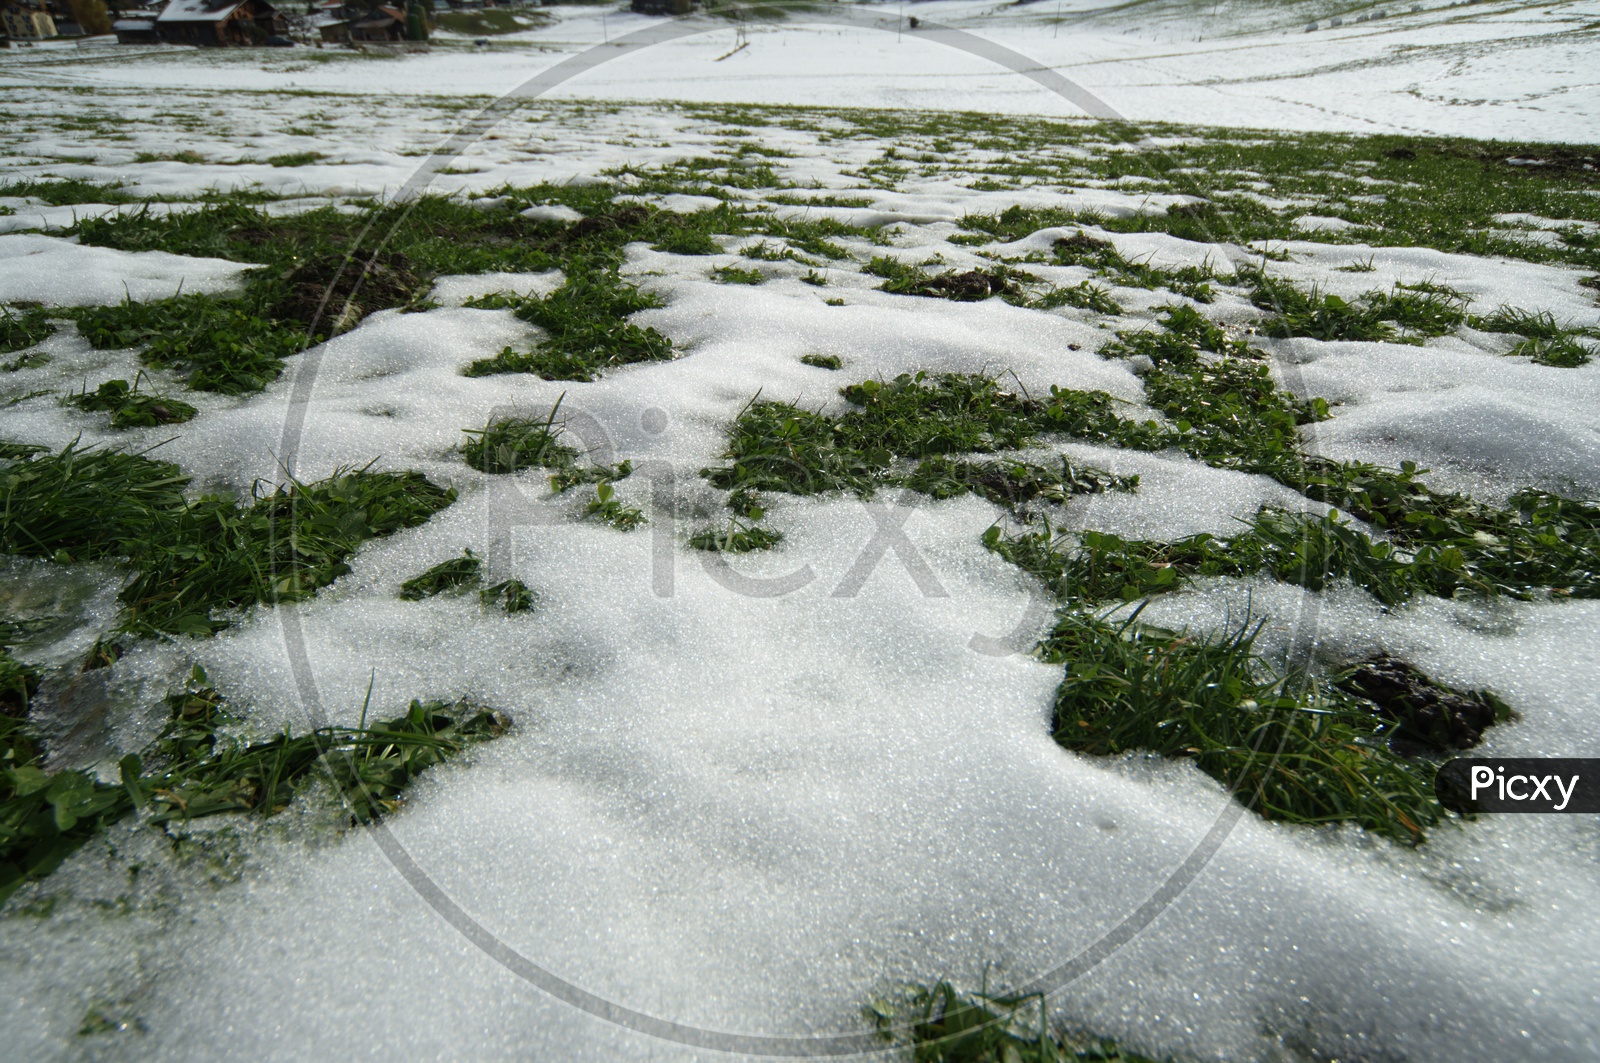 Snow on the grass